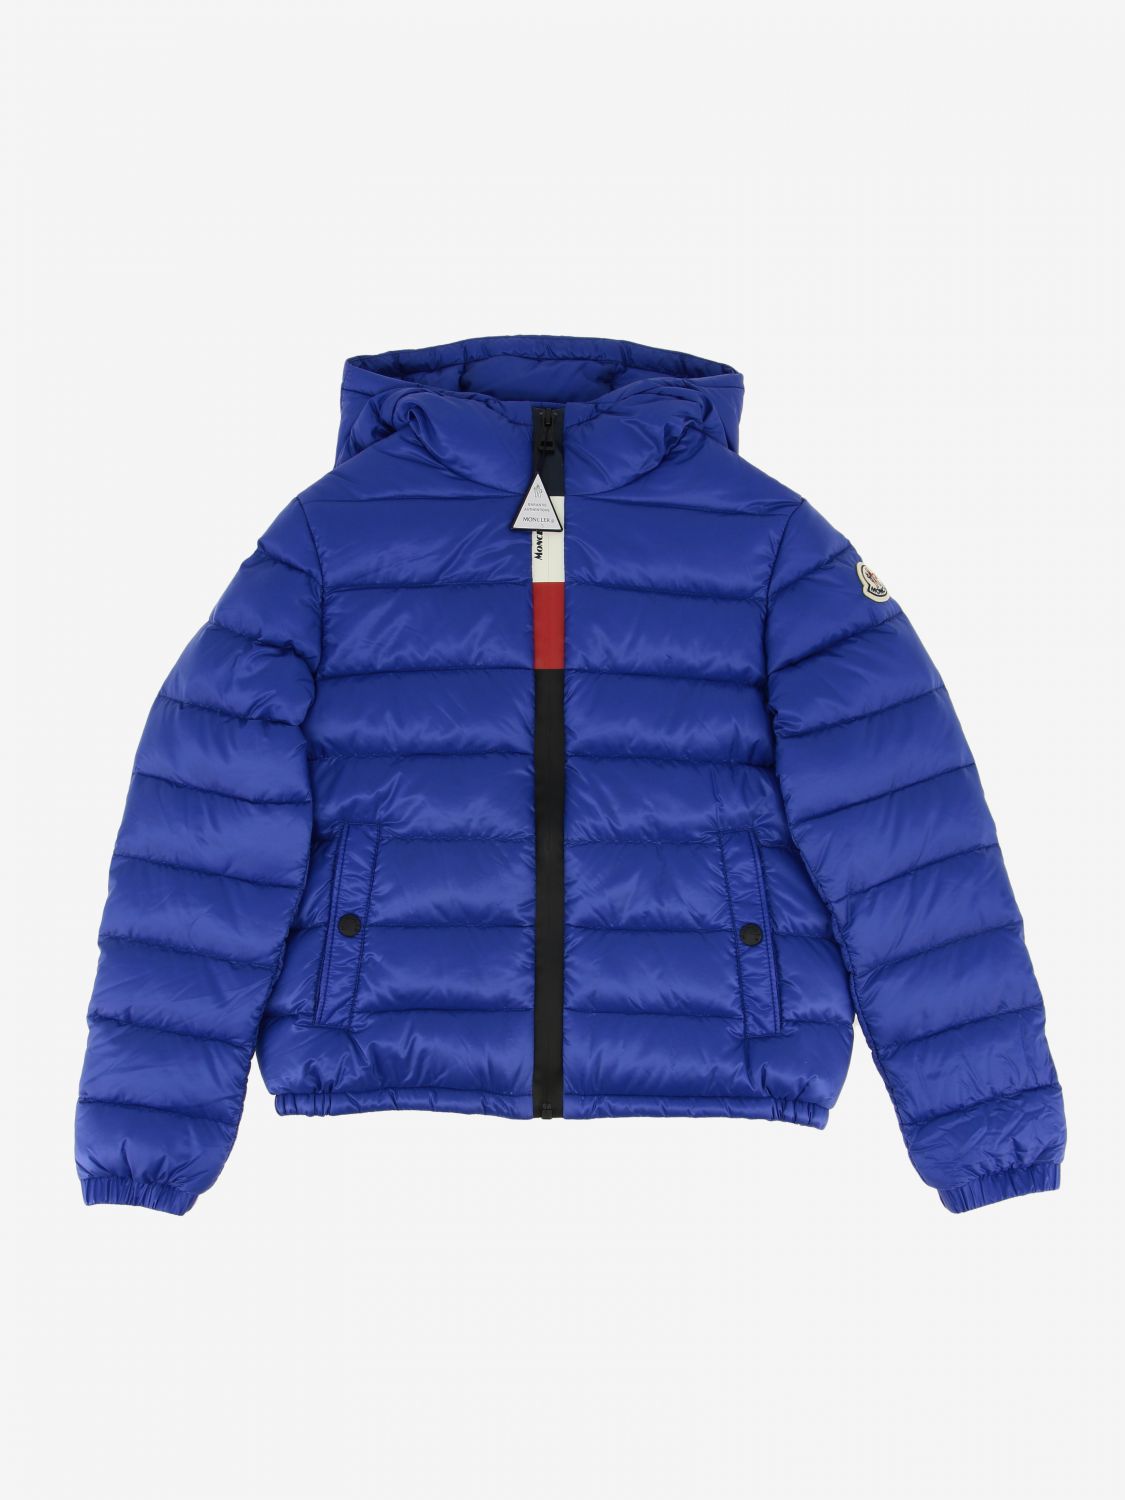 MONCLER: Rook duvet with hood and logo - Blue | Moncler jacket ...